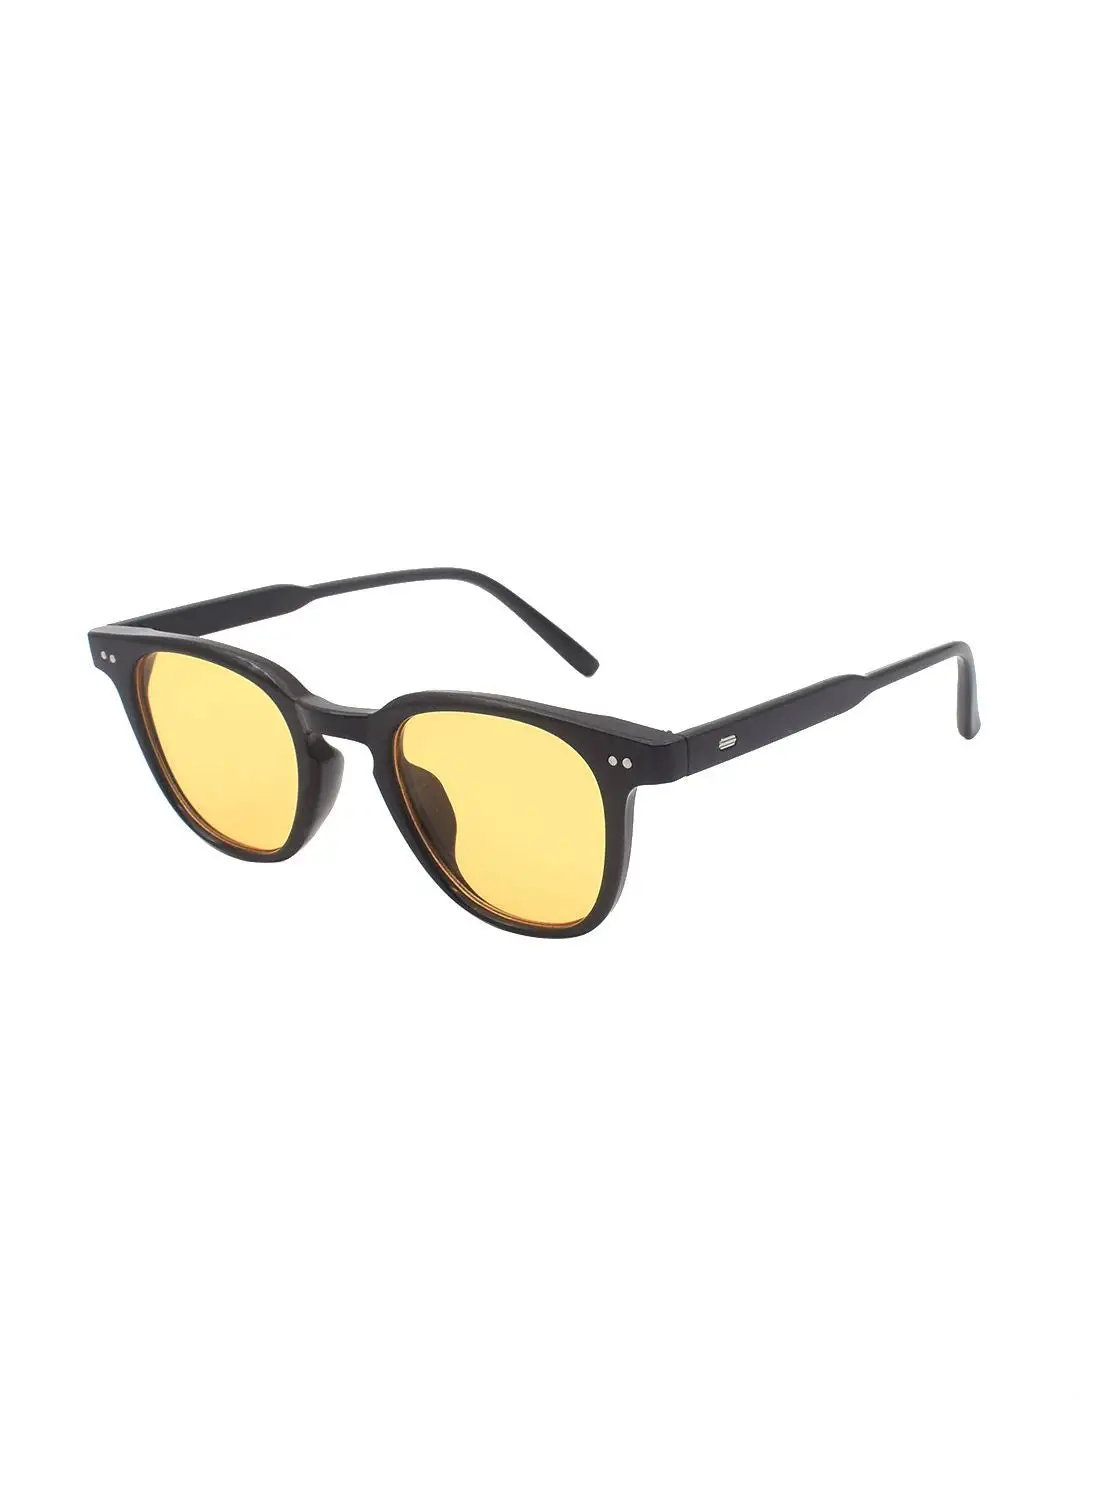 MADEYES Square Sunglasses EE20X062-1